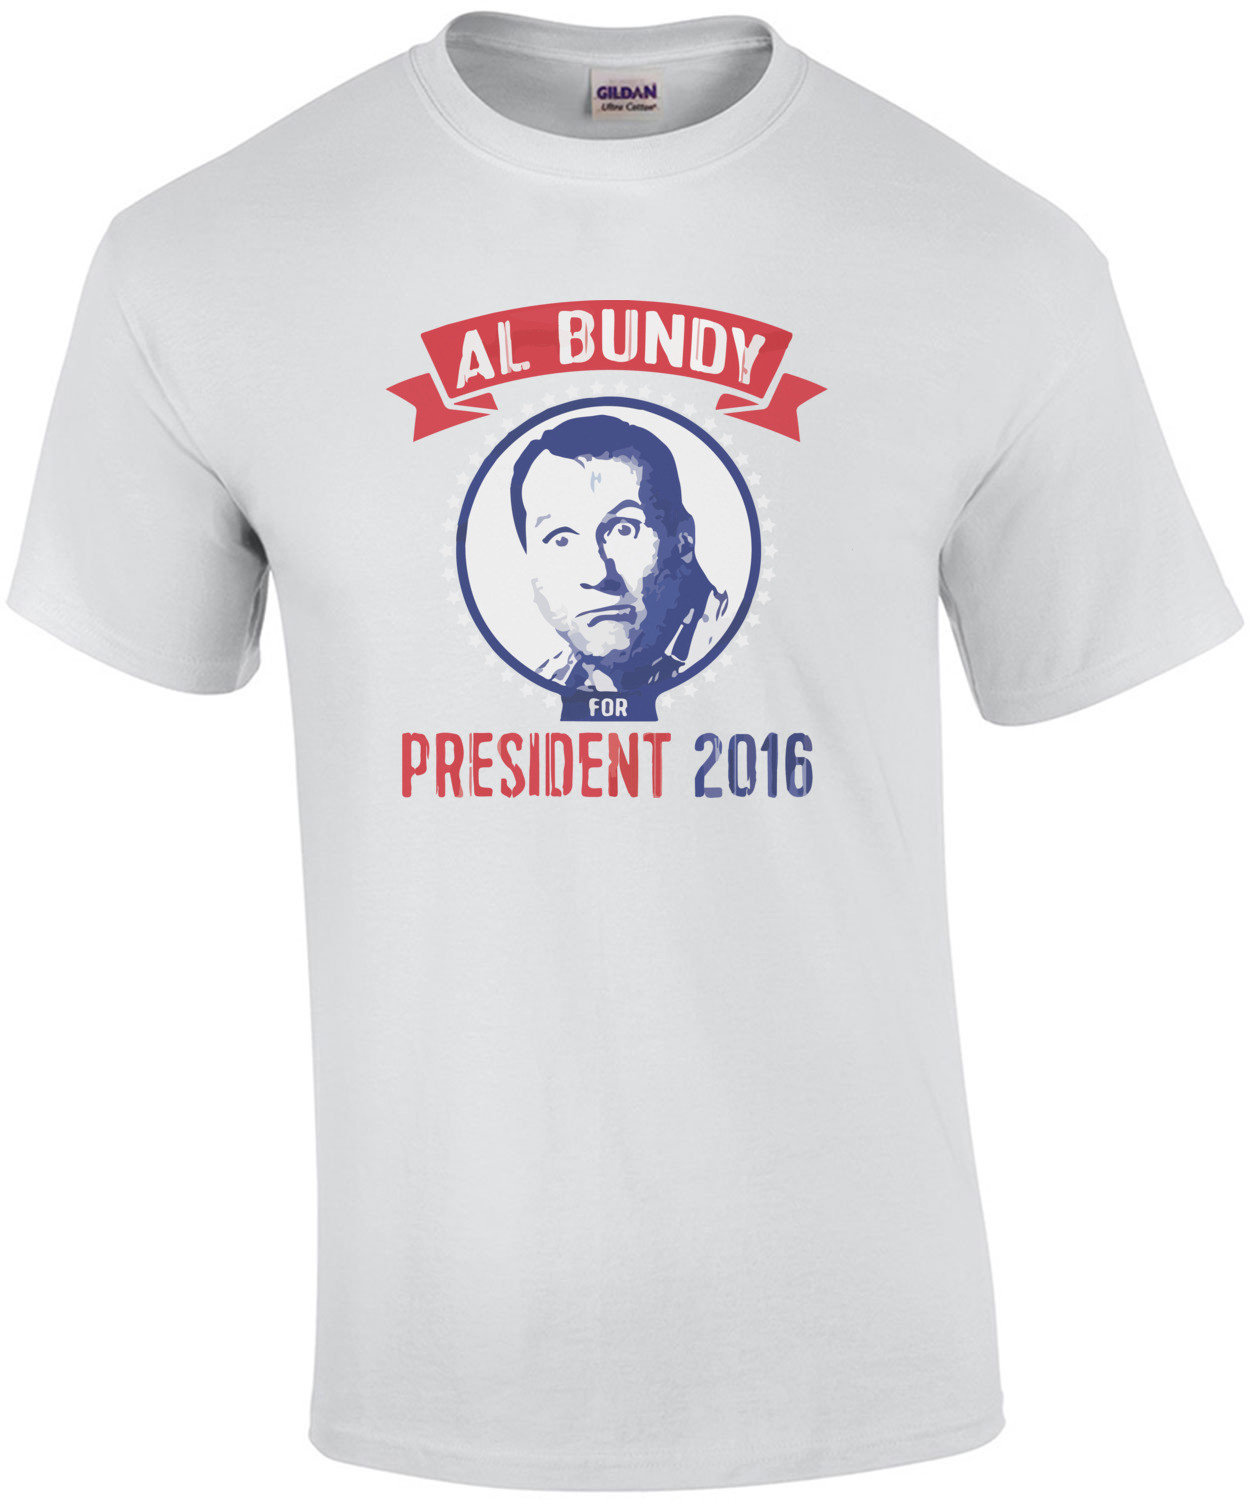 Al Bundy for President 2016 - Funny Election